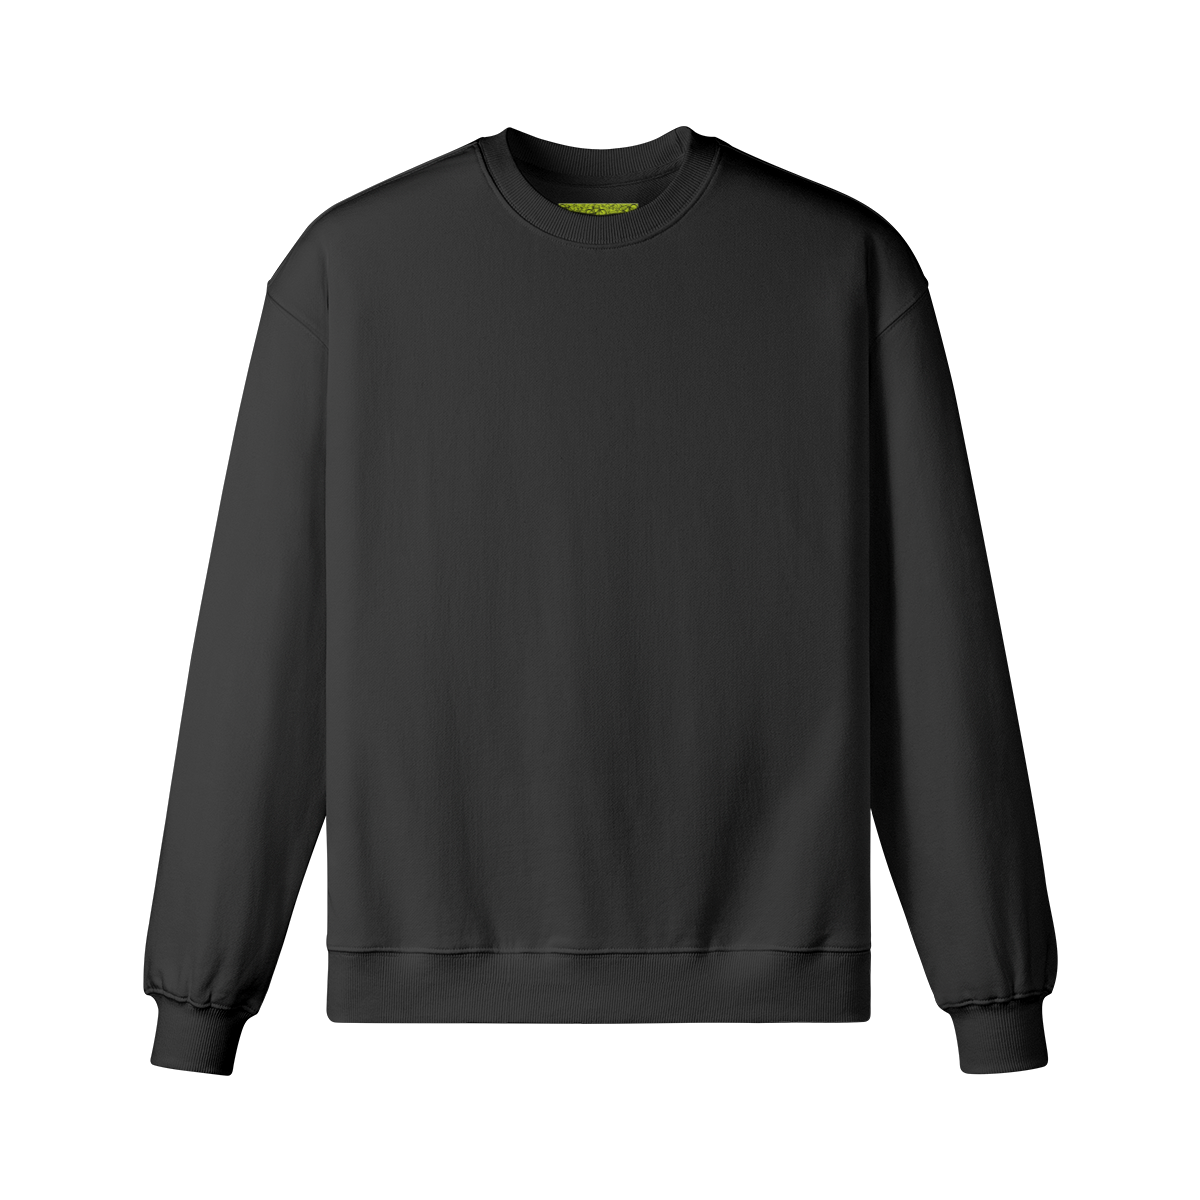 ACID TRIP (BACK PRINT) - Unisex Oversized Sweatshirt